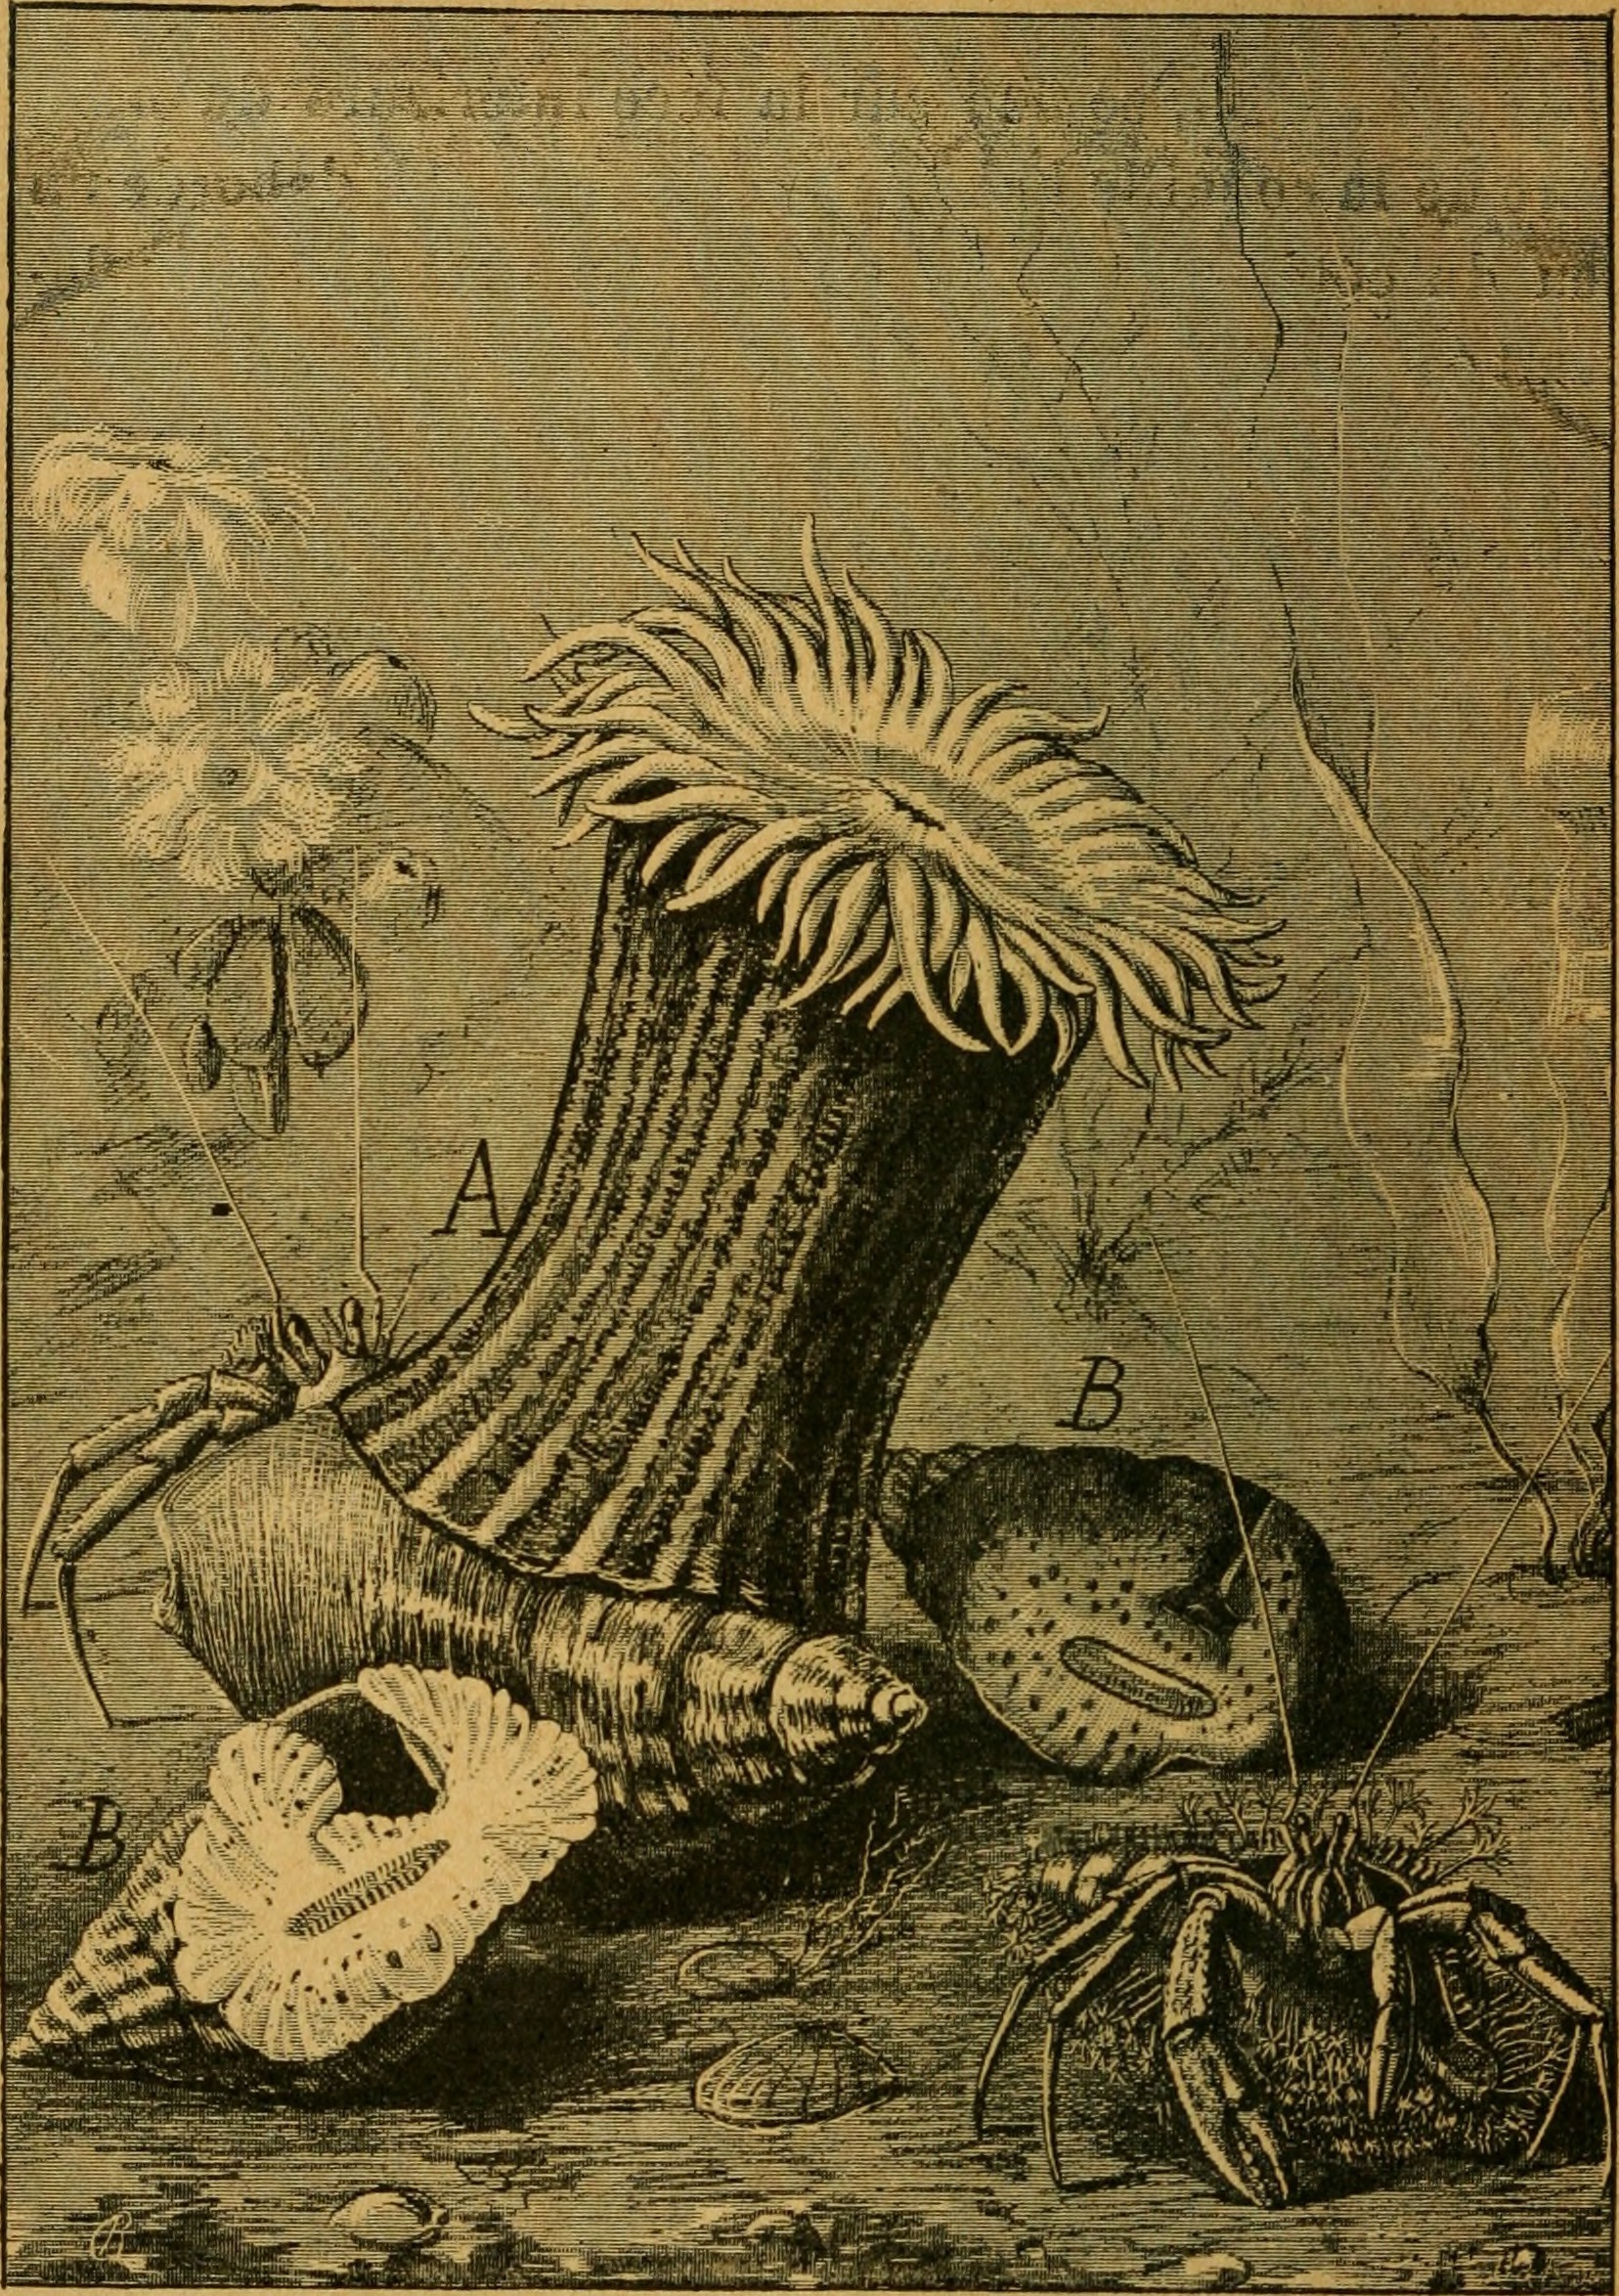 Image of parasitic anemone